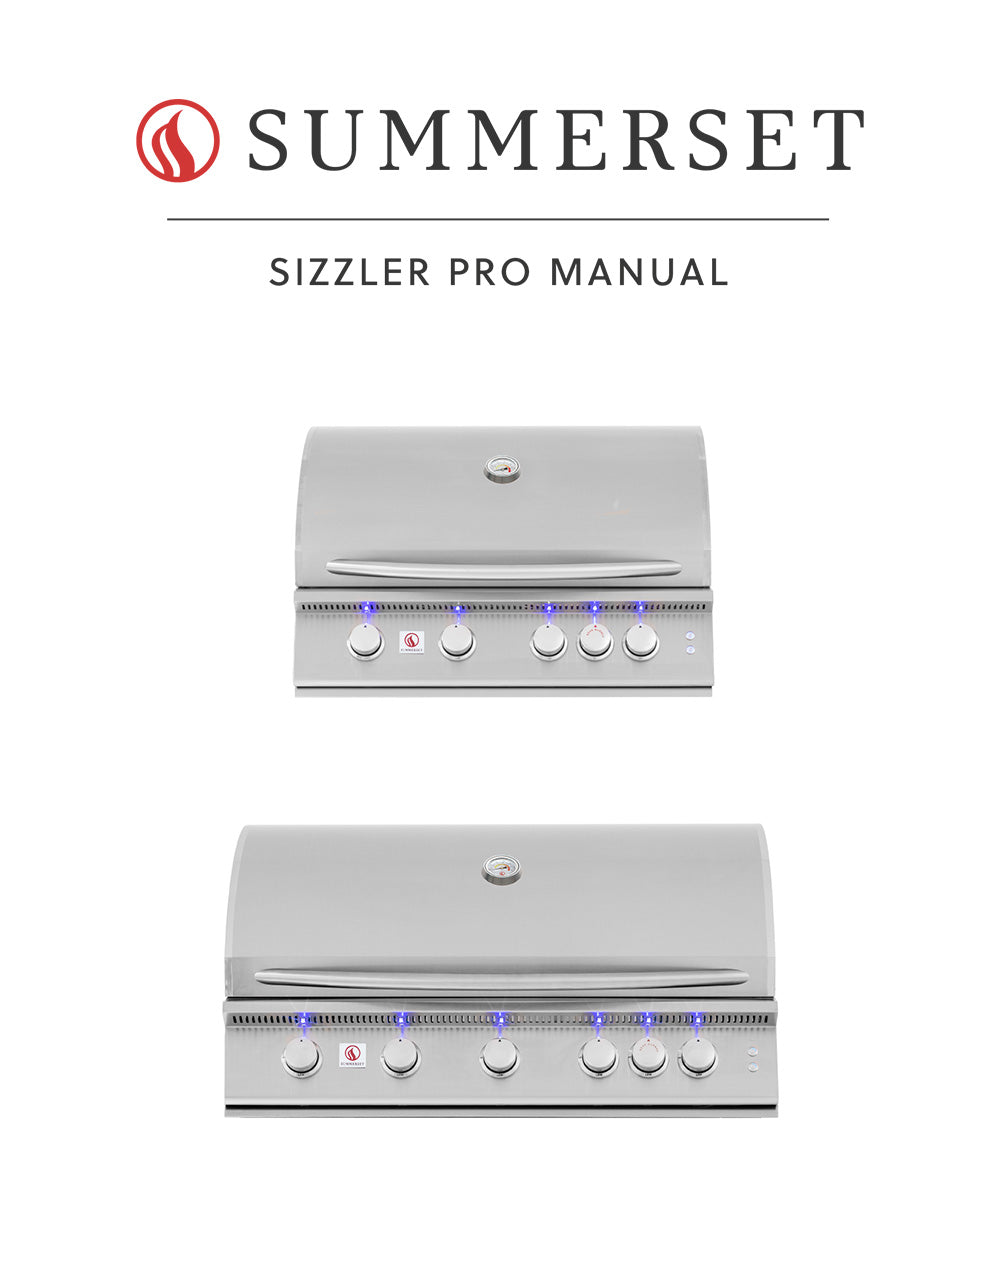 Summerset Sizzler Pro Manual